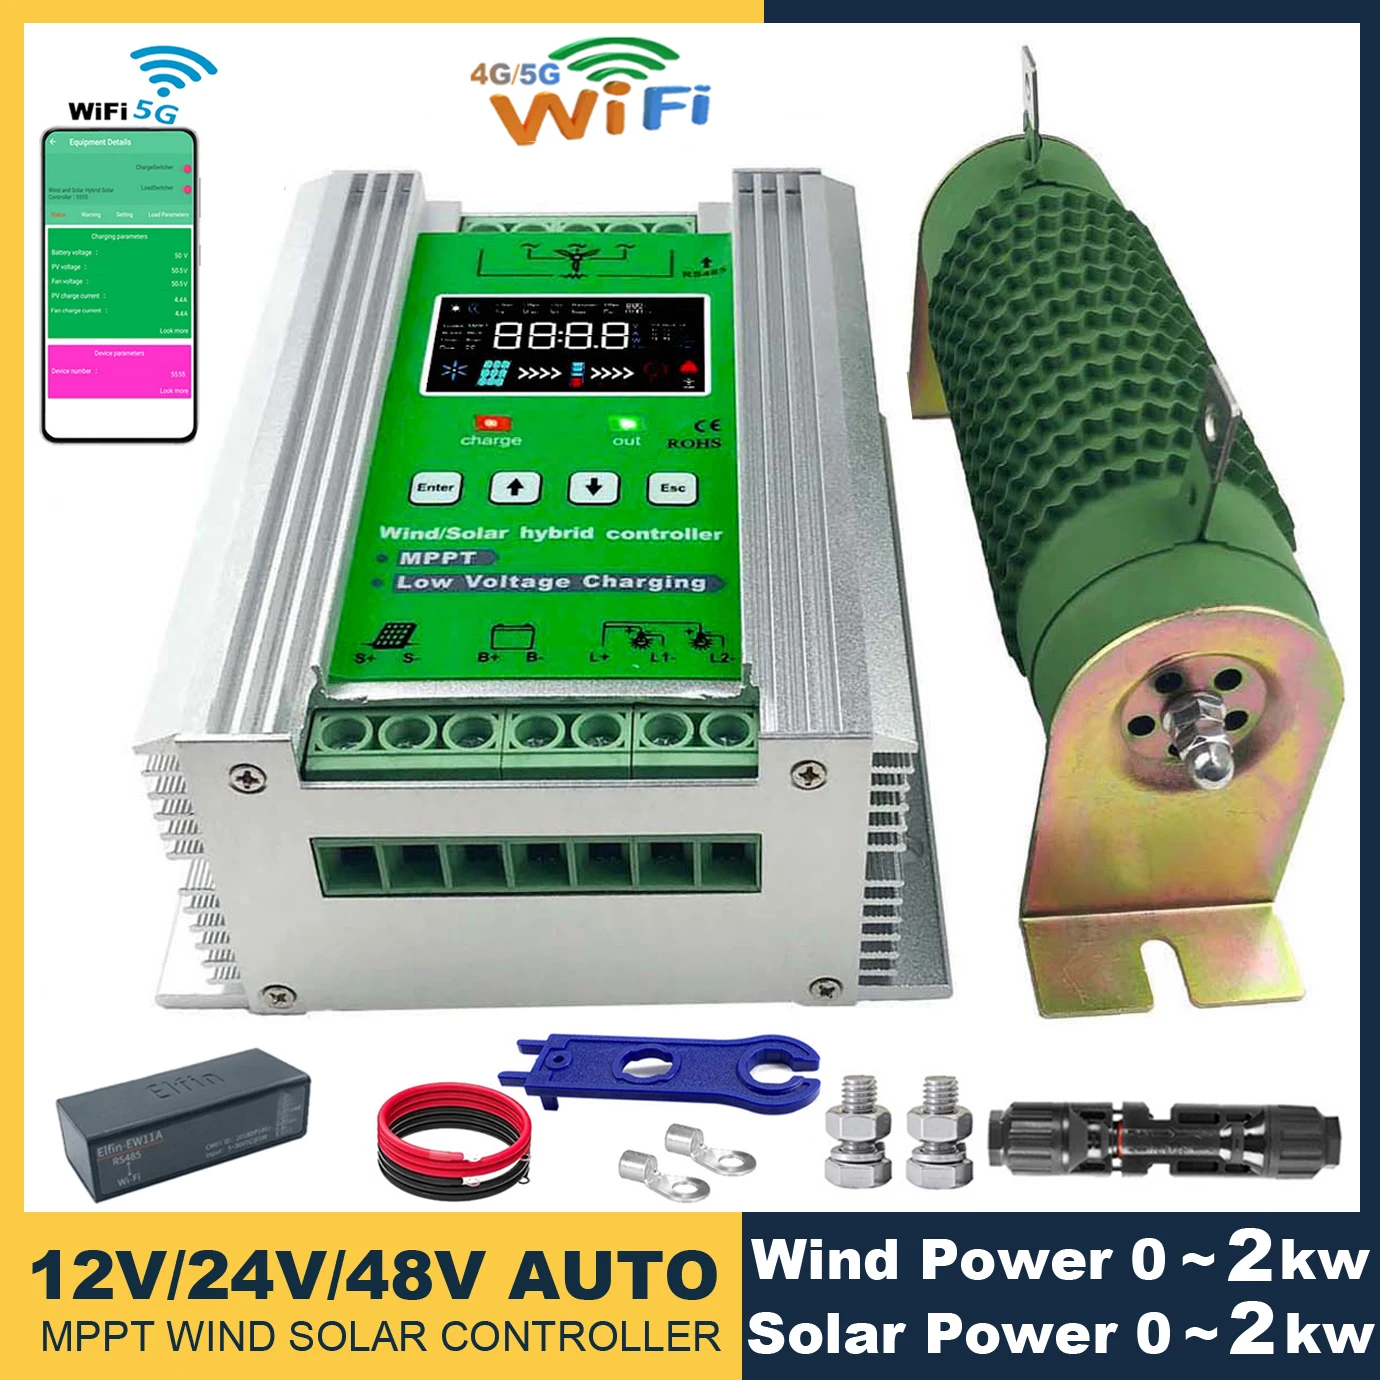 

12V 24V 48V 2000W MPPT Hybird Wind Solar Charge Controller Wind Generator Regulator for For Lifepo4 Lithium Lead Acid